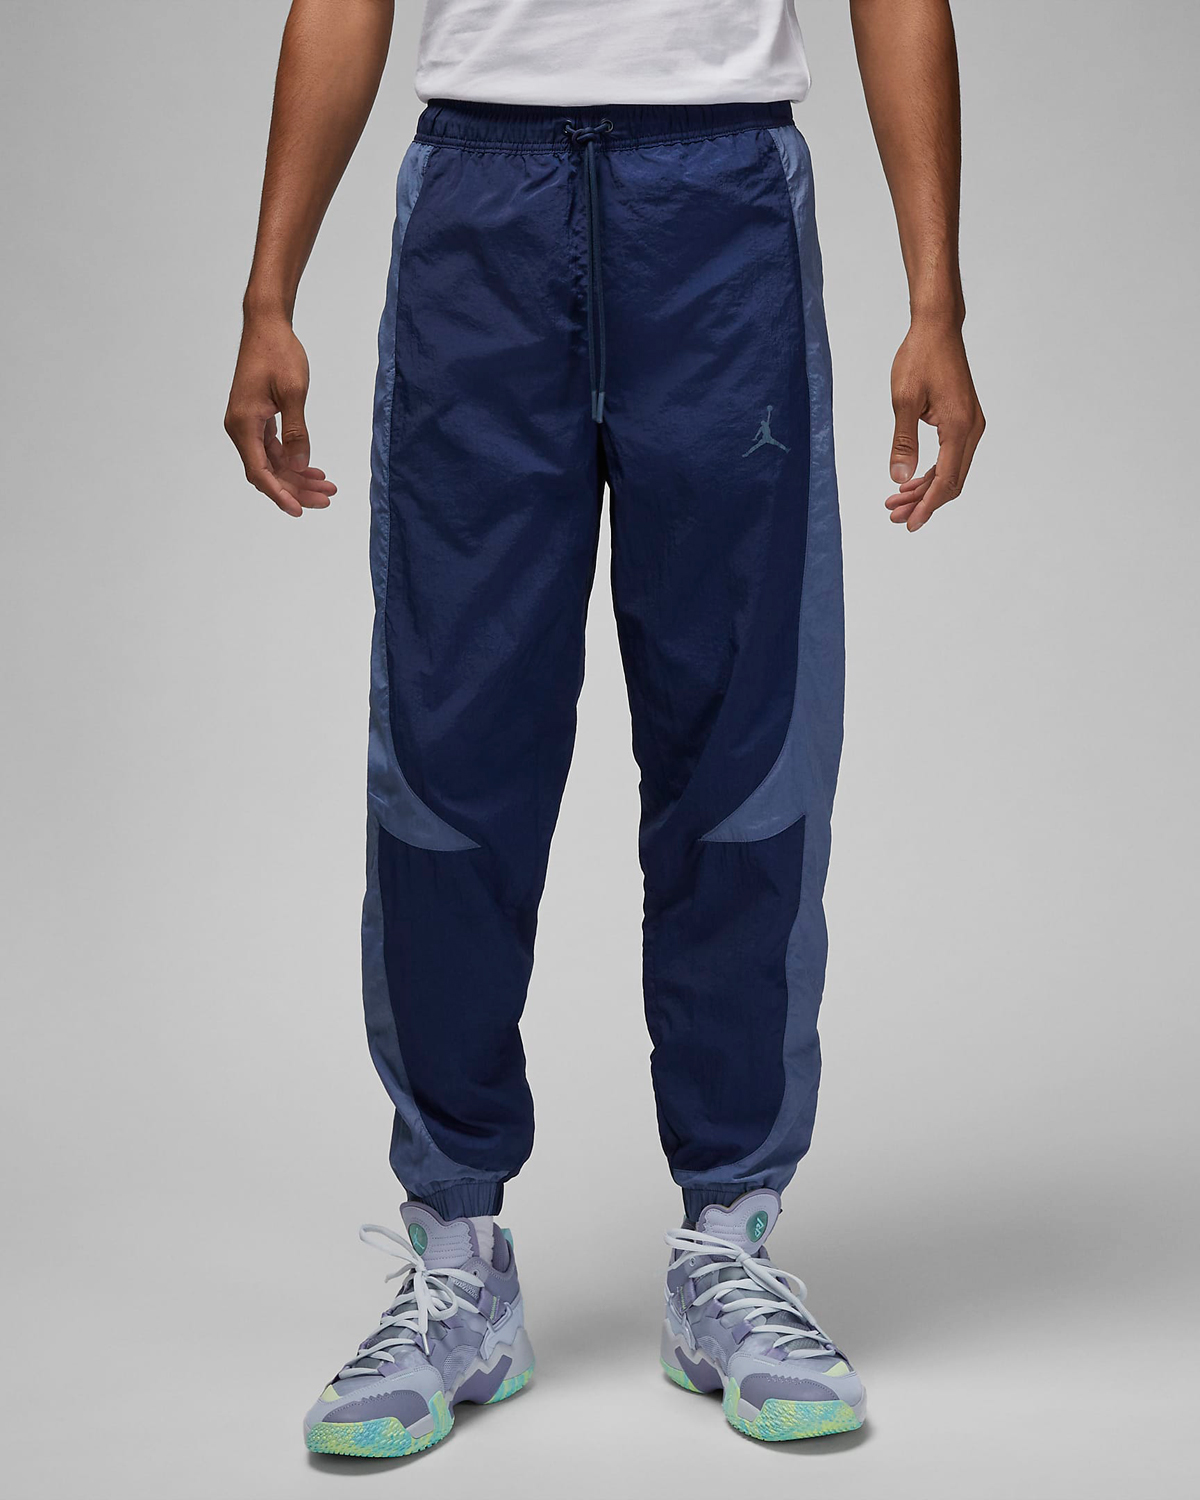 Jordan-Sport-Jam-Warm-Up-Pants-Midnight-Navy-Diffused-Blue